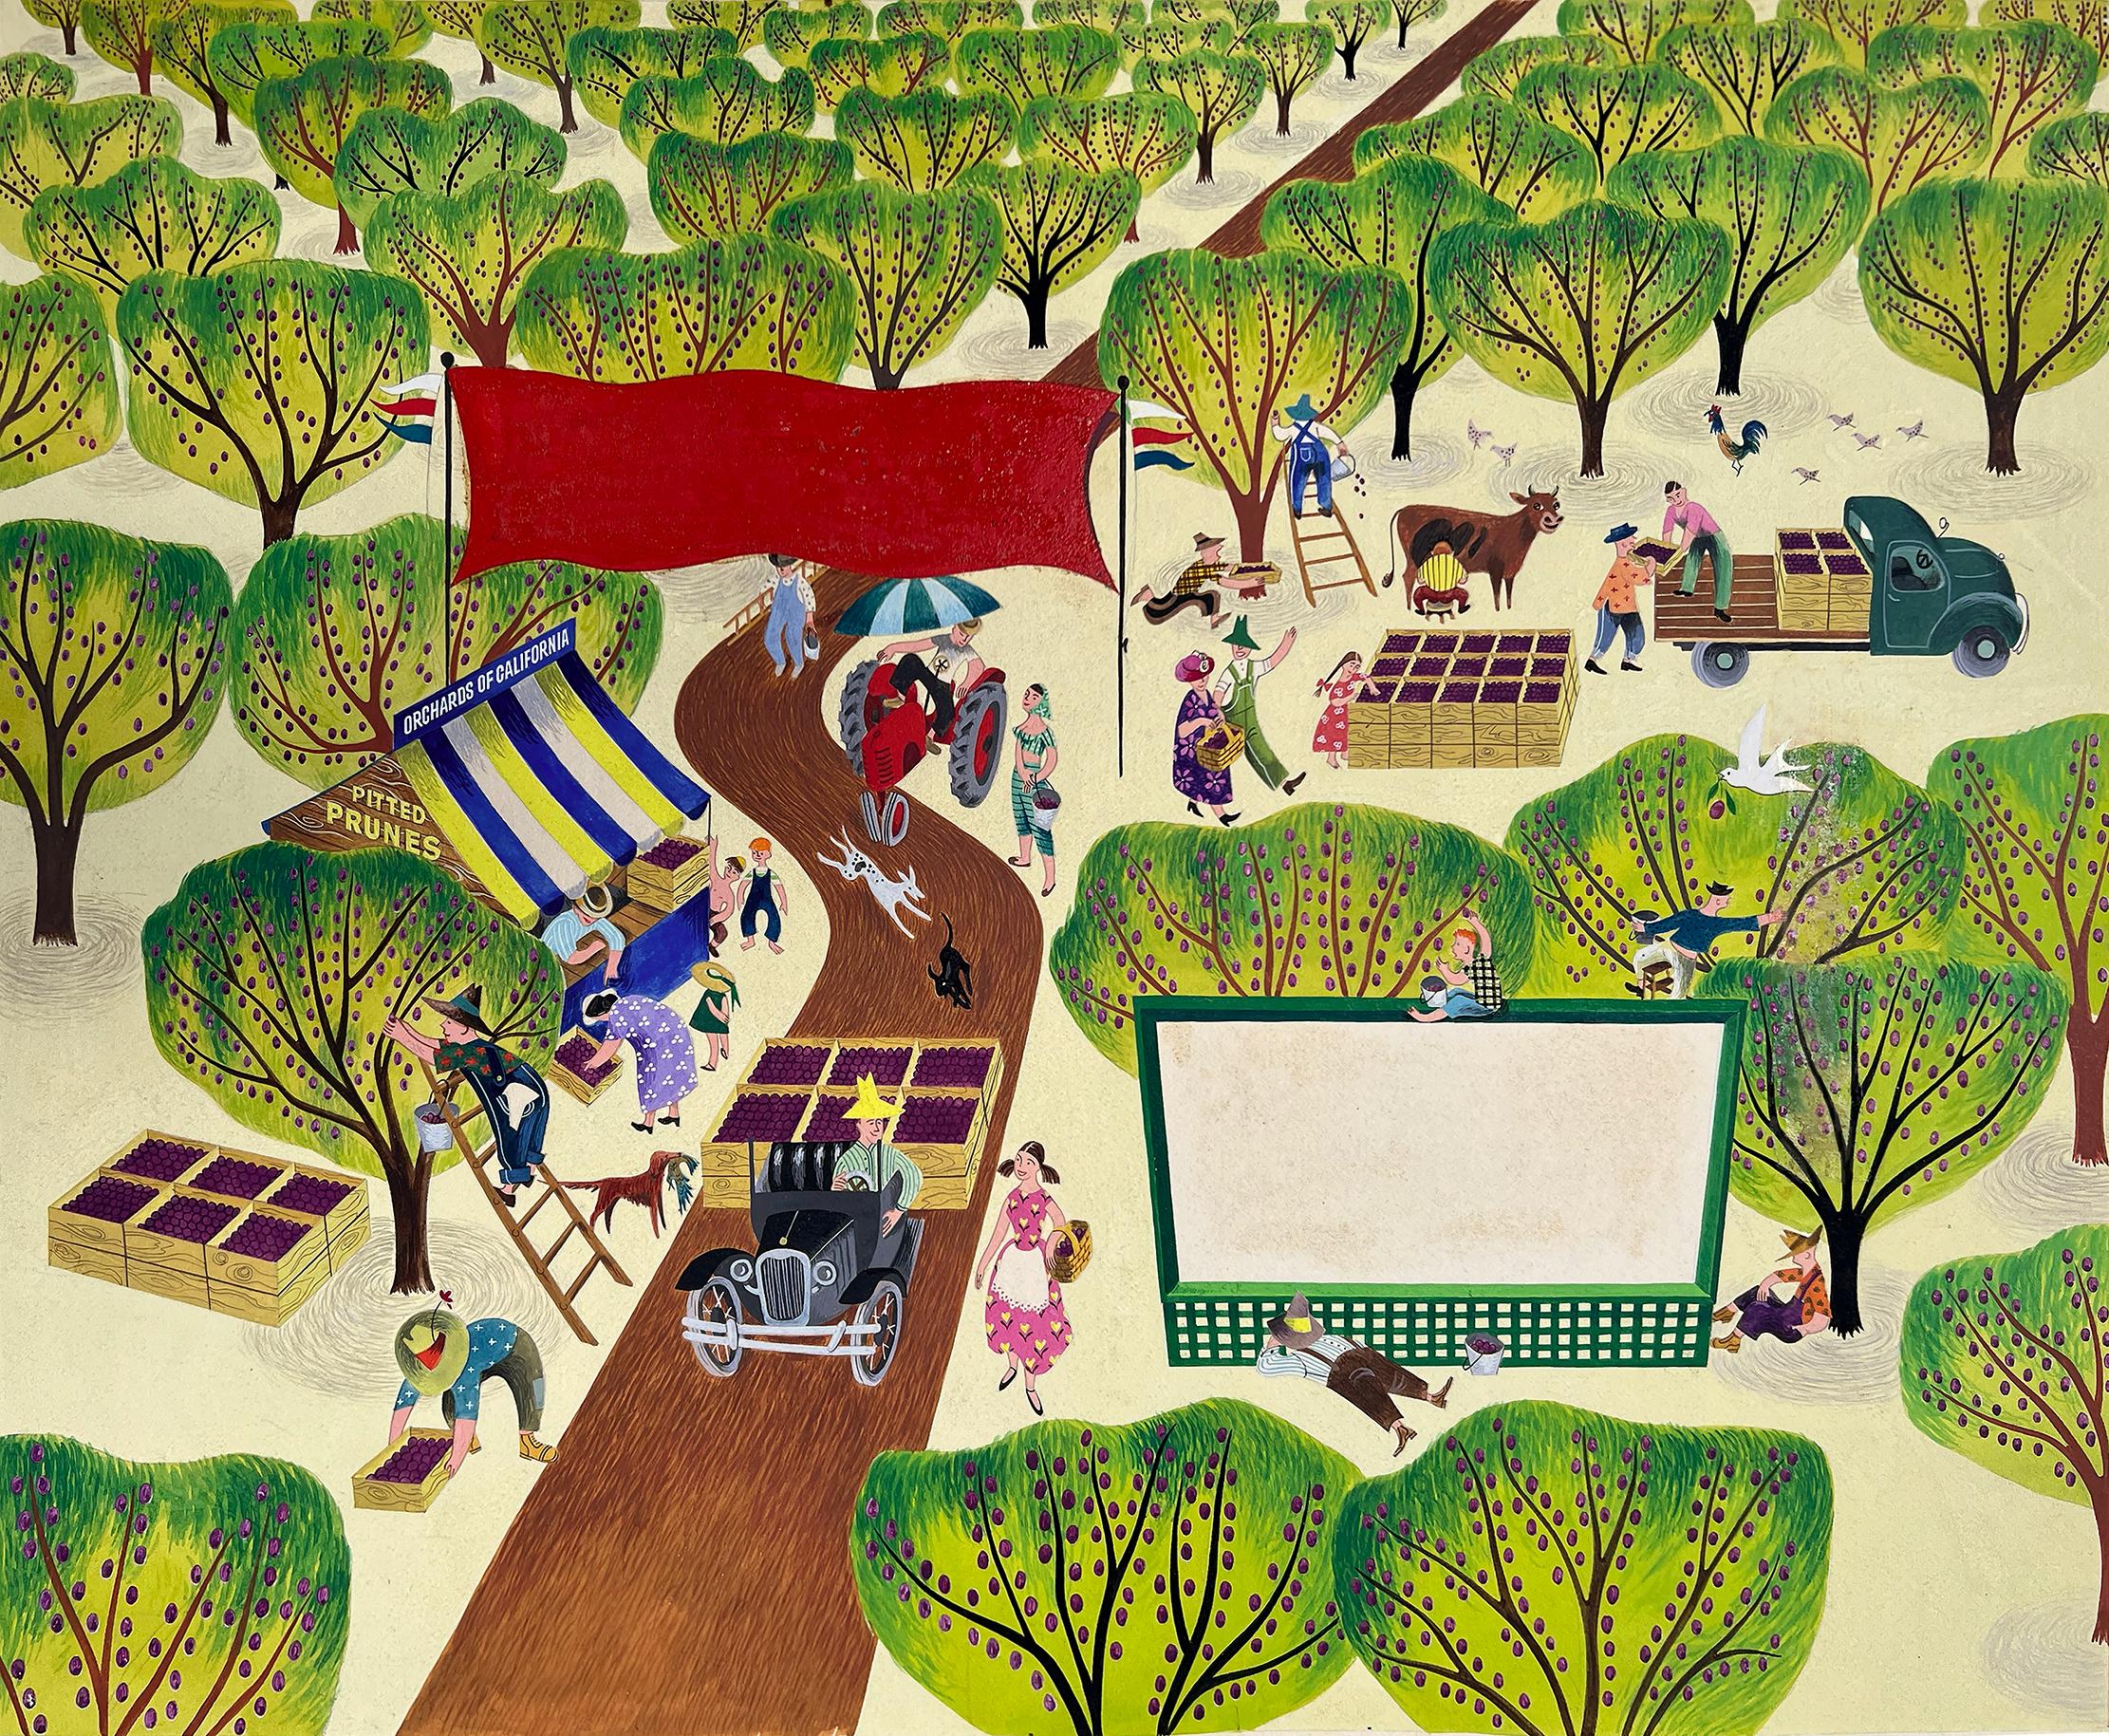 Happy California Prune Farmers - Female Illustrator - Mid Century